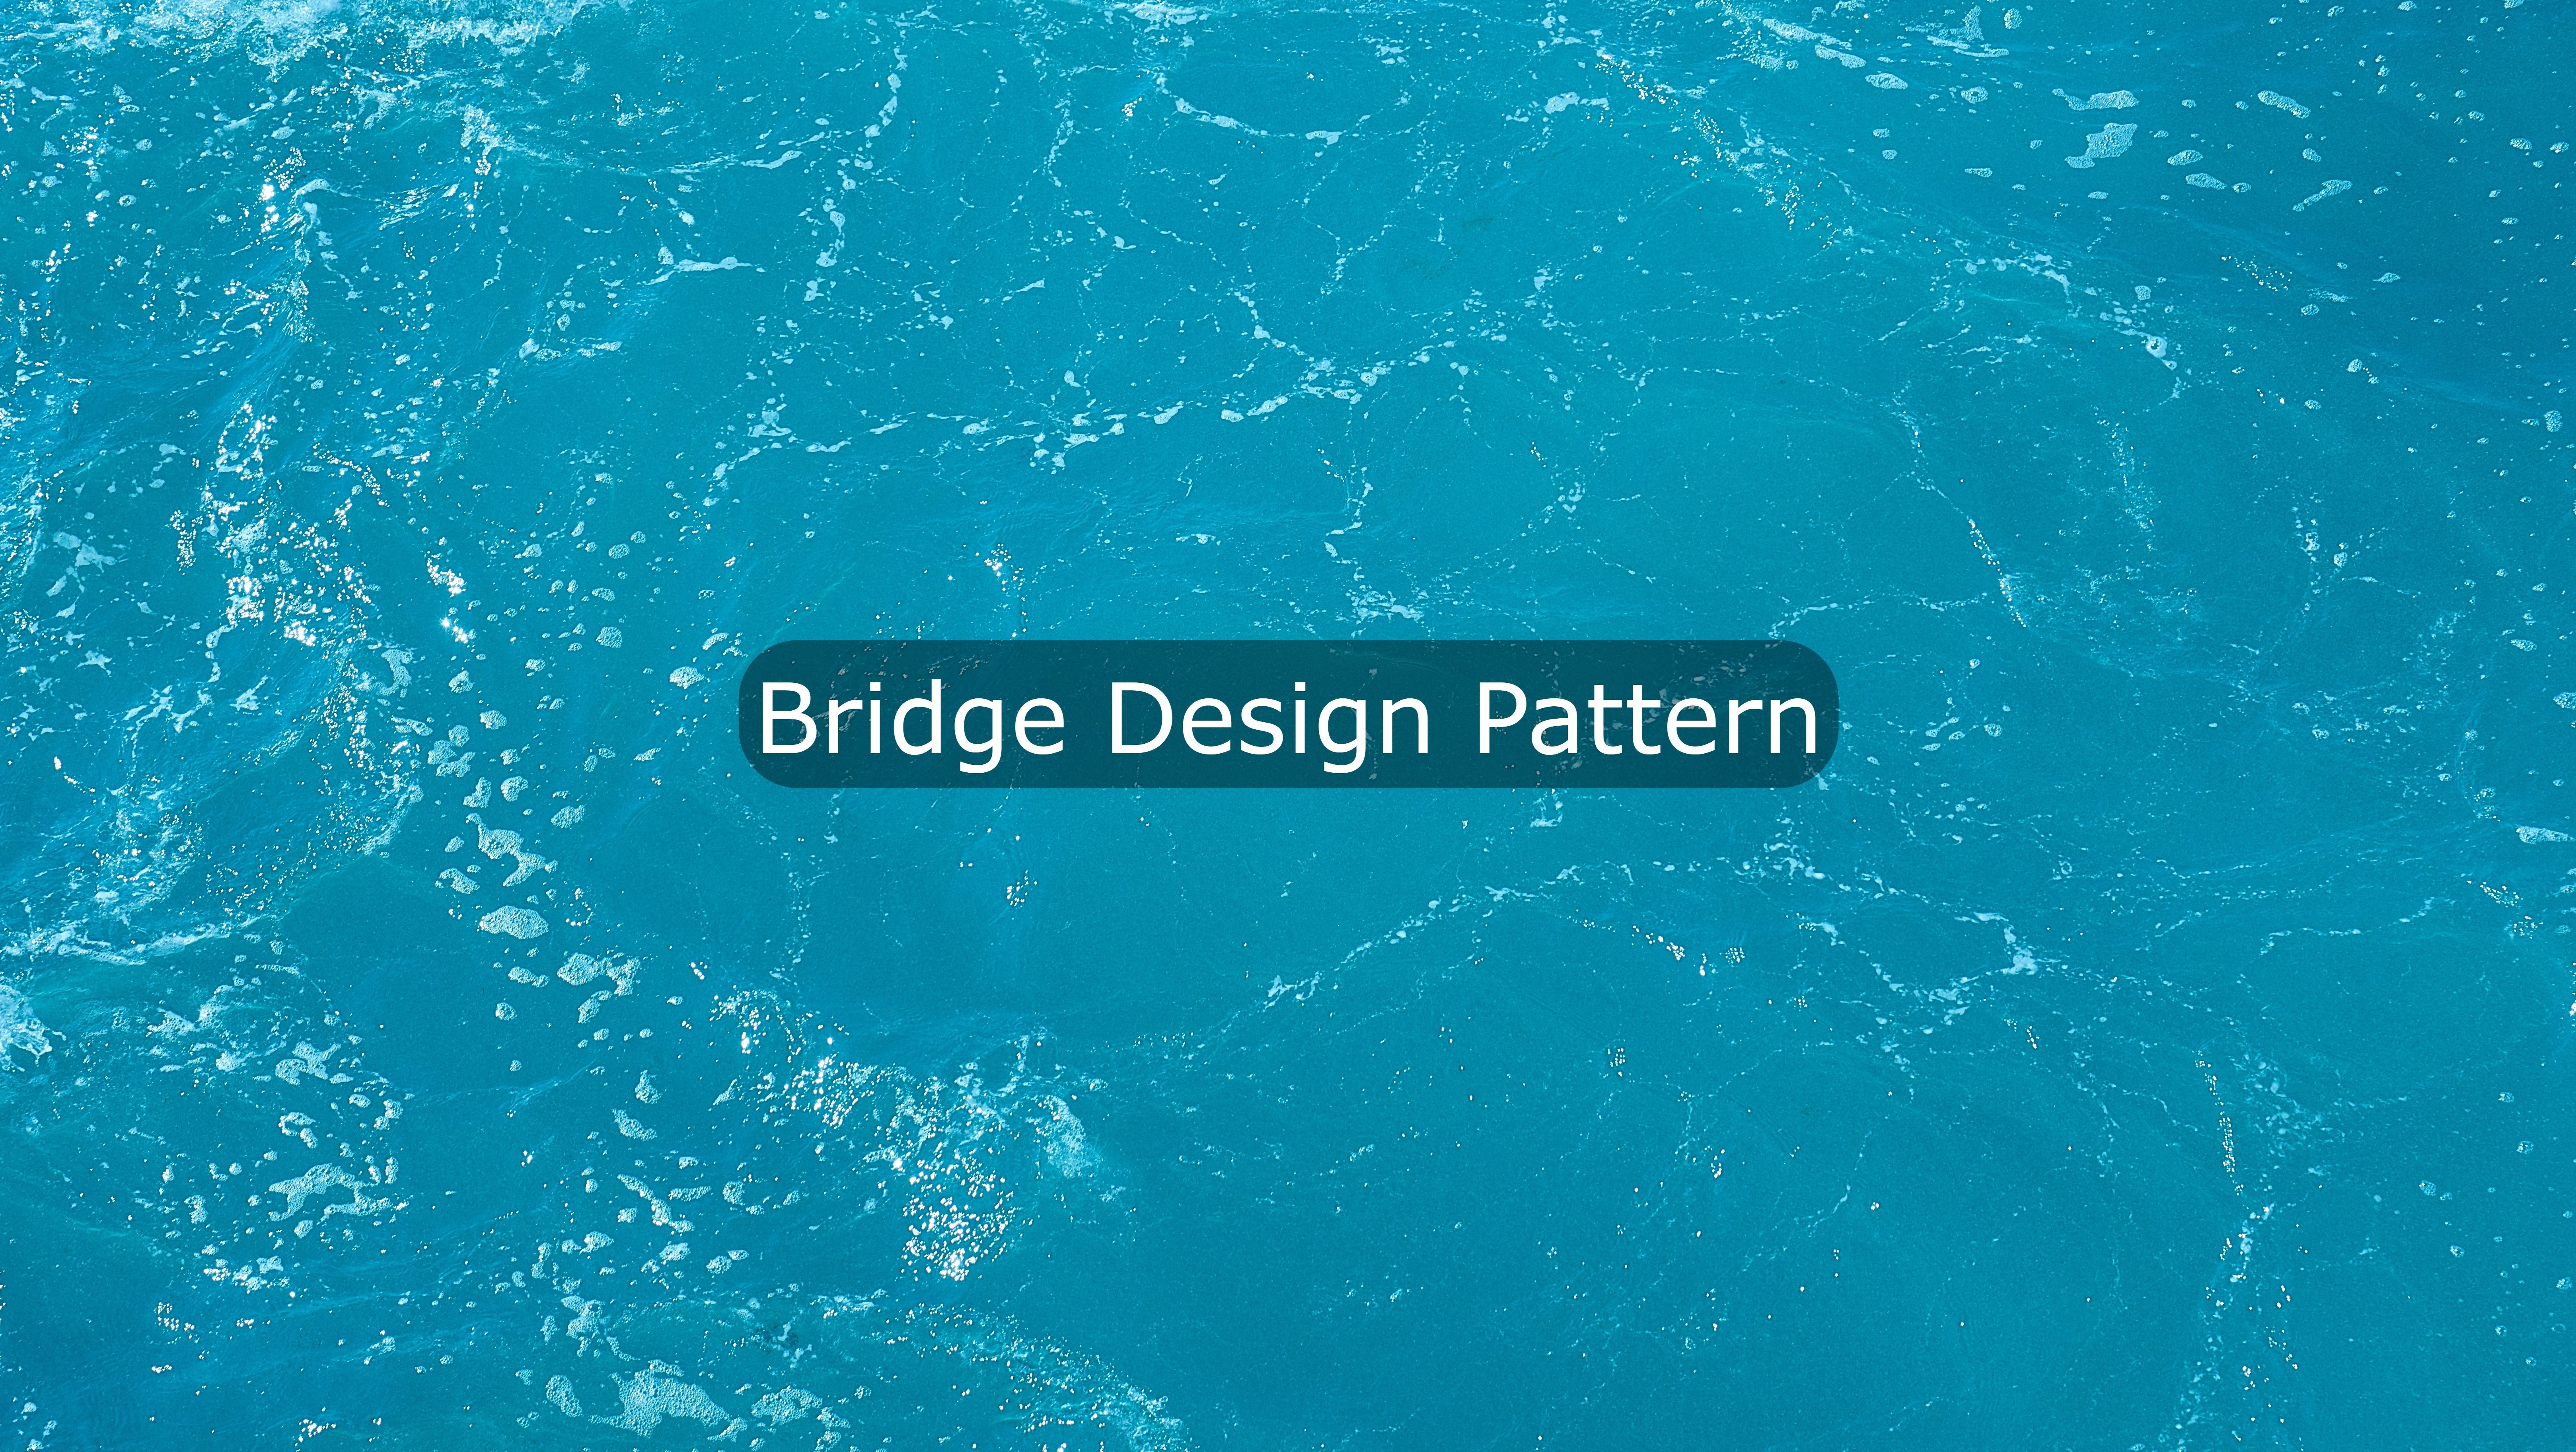 The Bridge Design Pattern